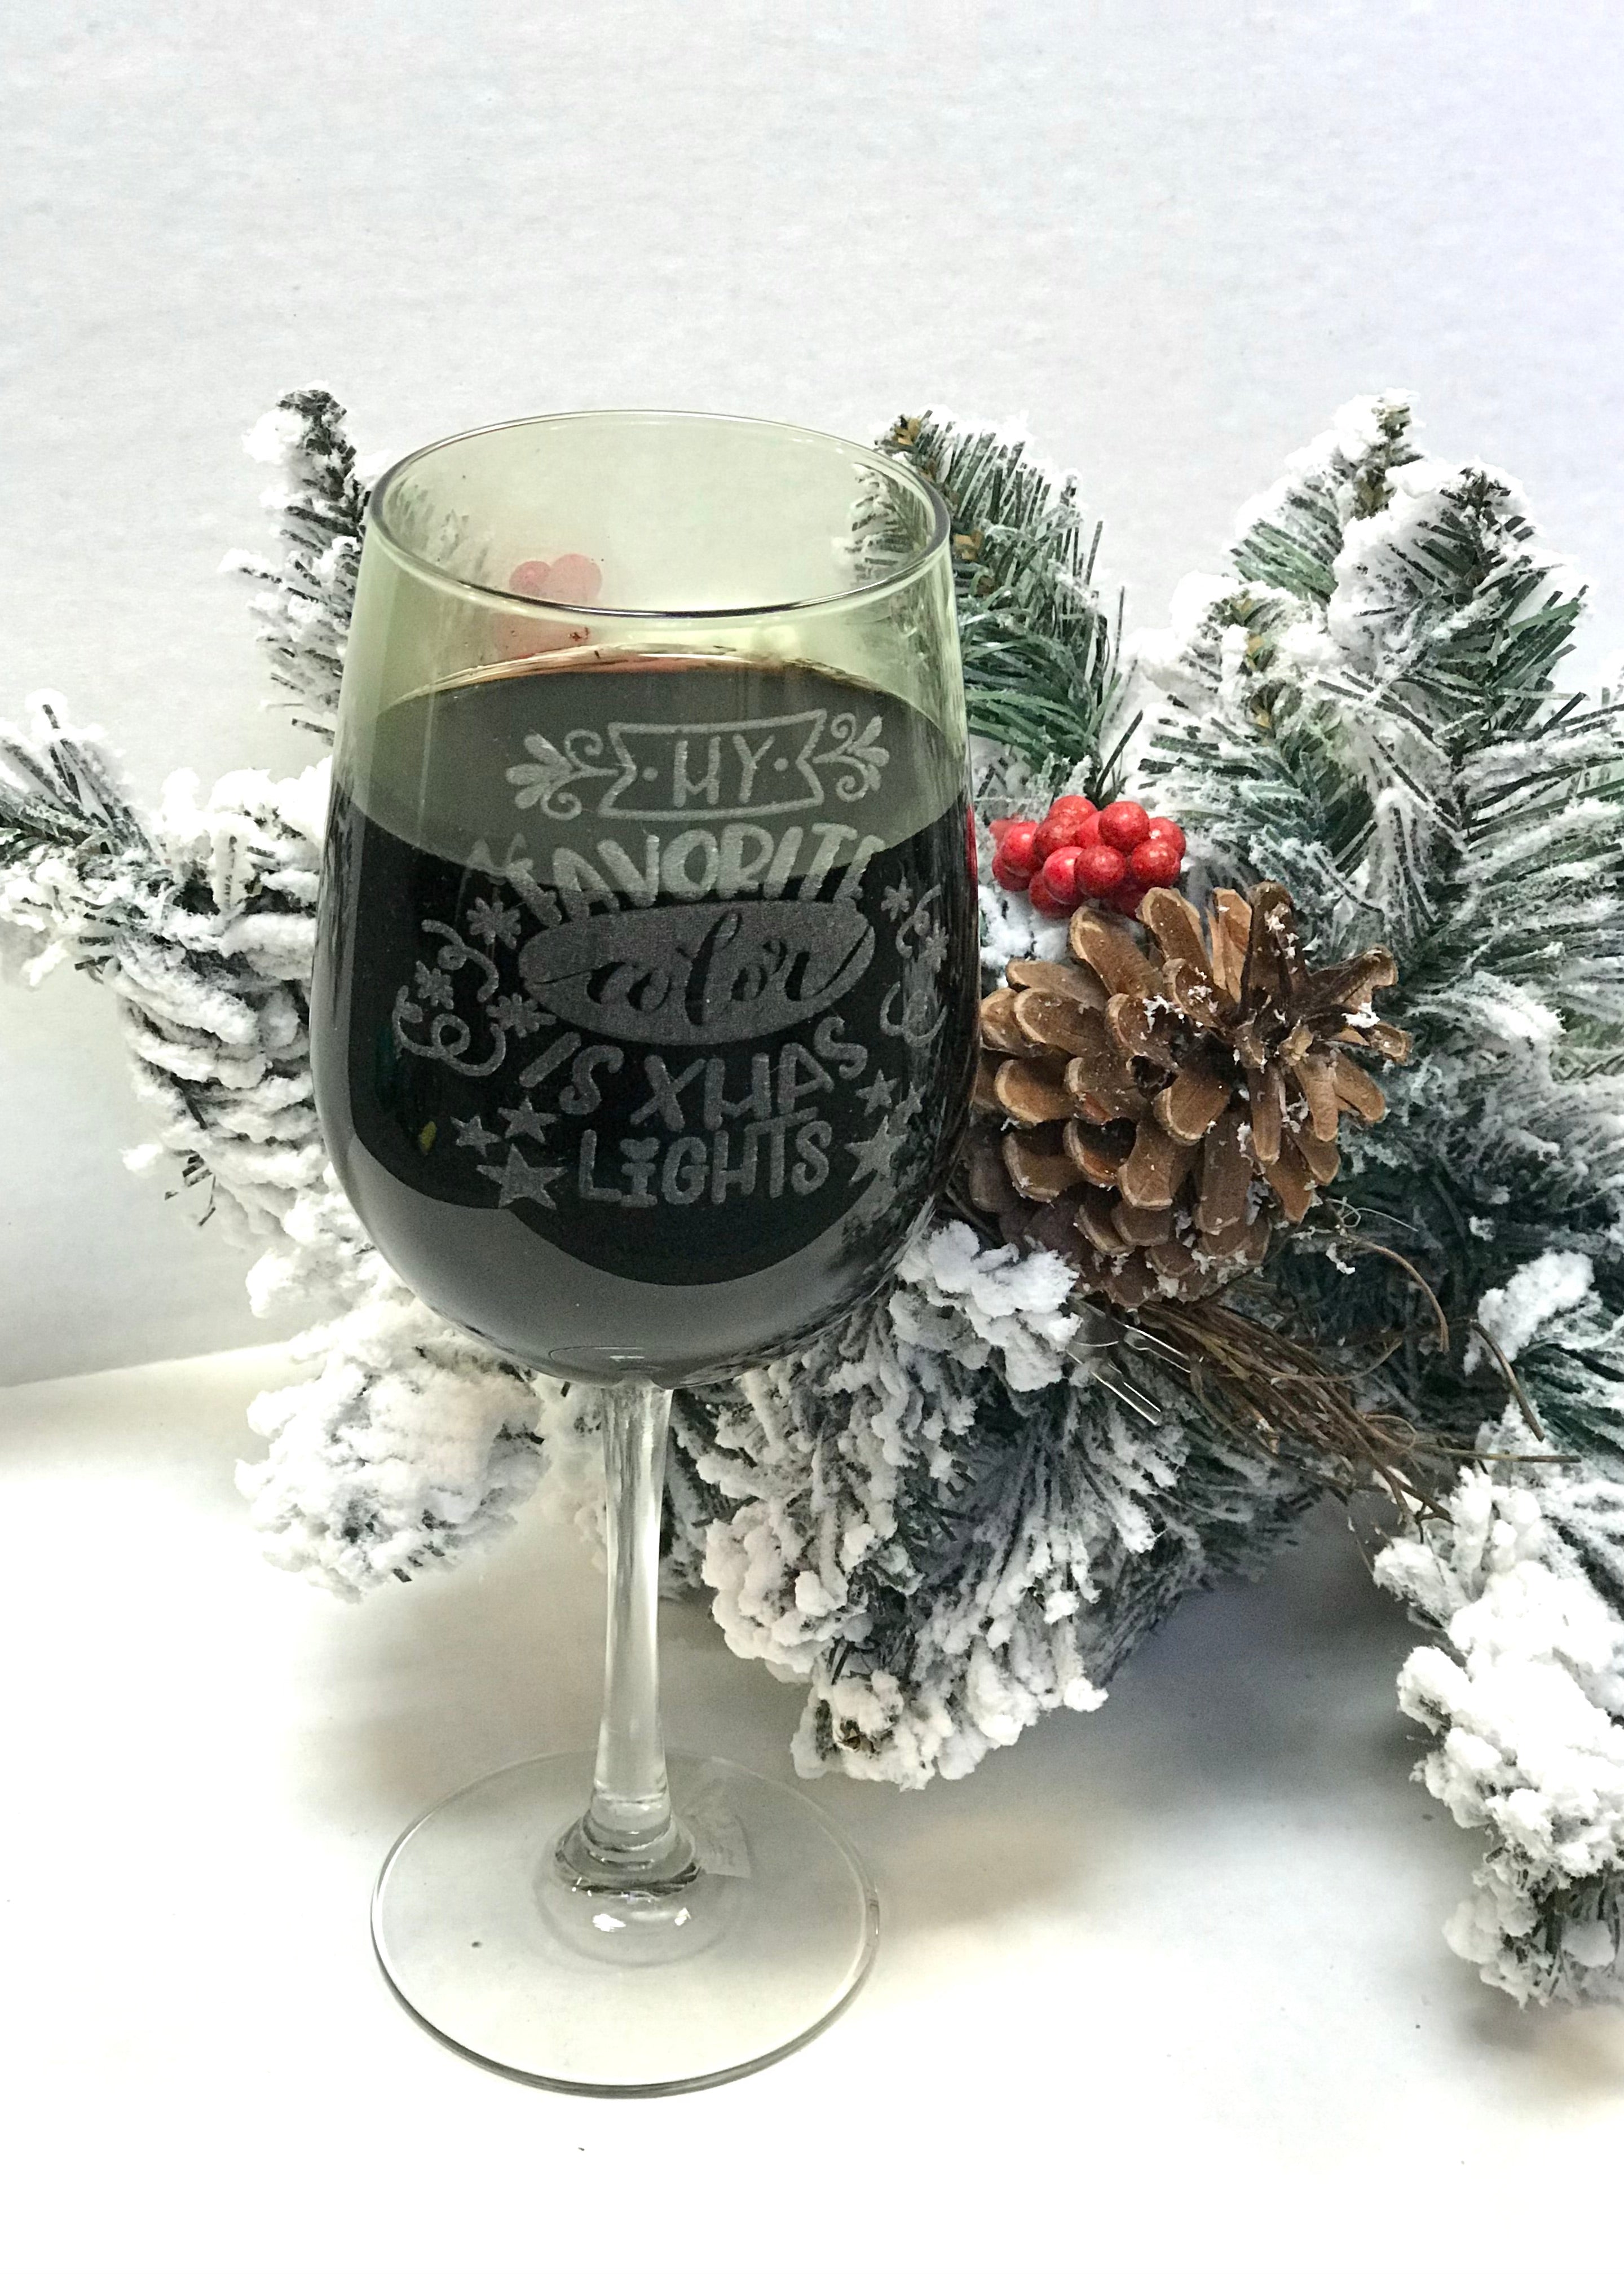 Silver Christmas Wine Glasses, Christmas Glasses